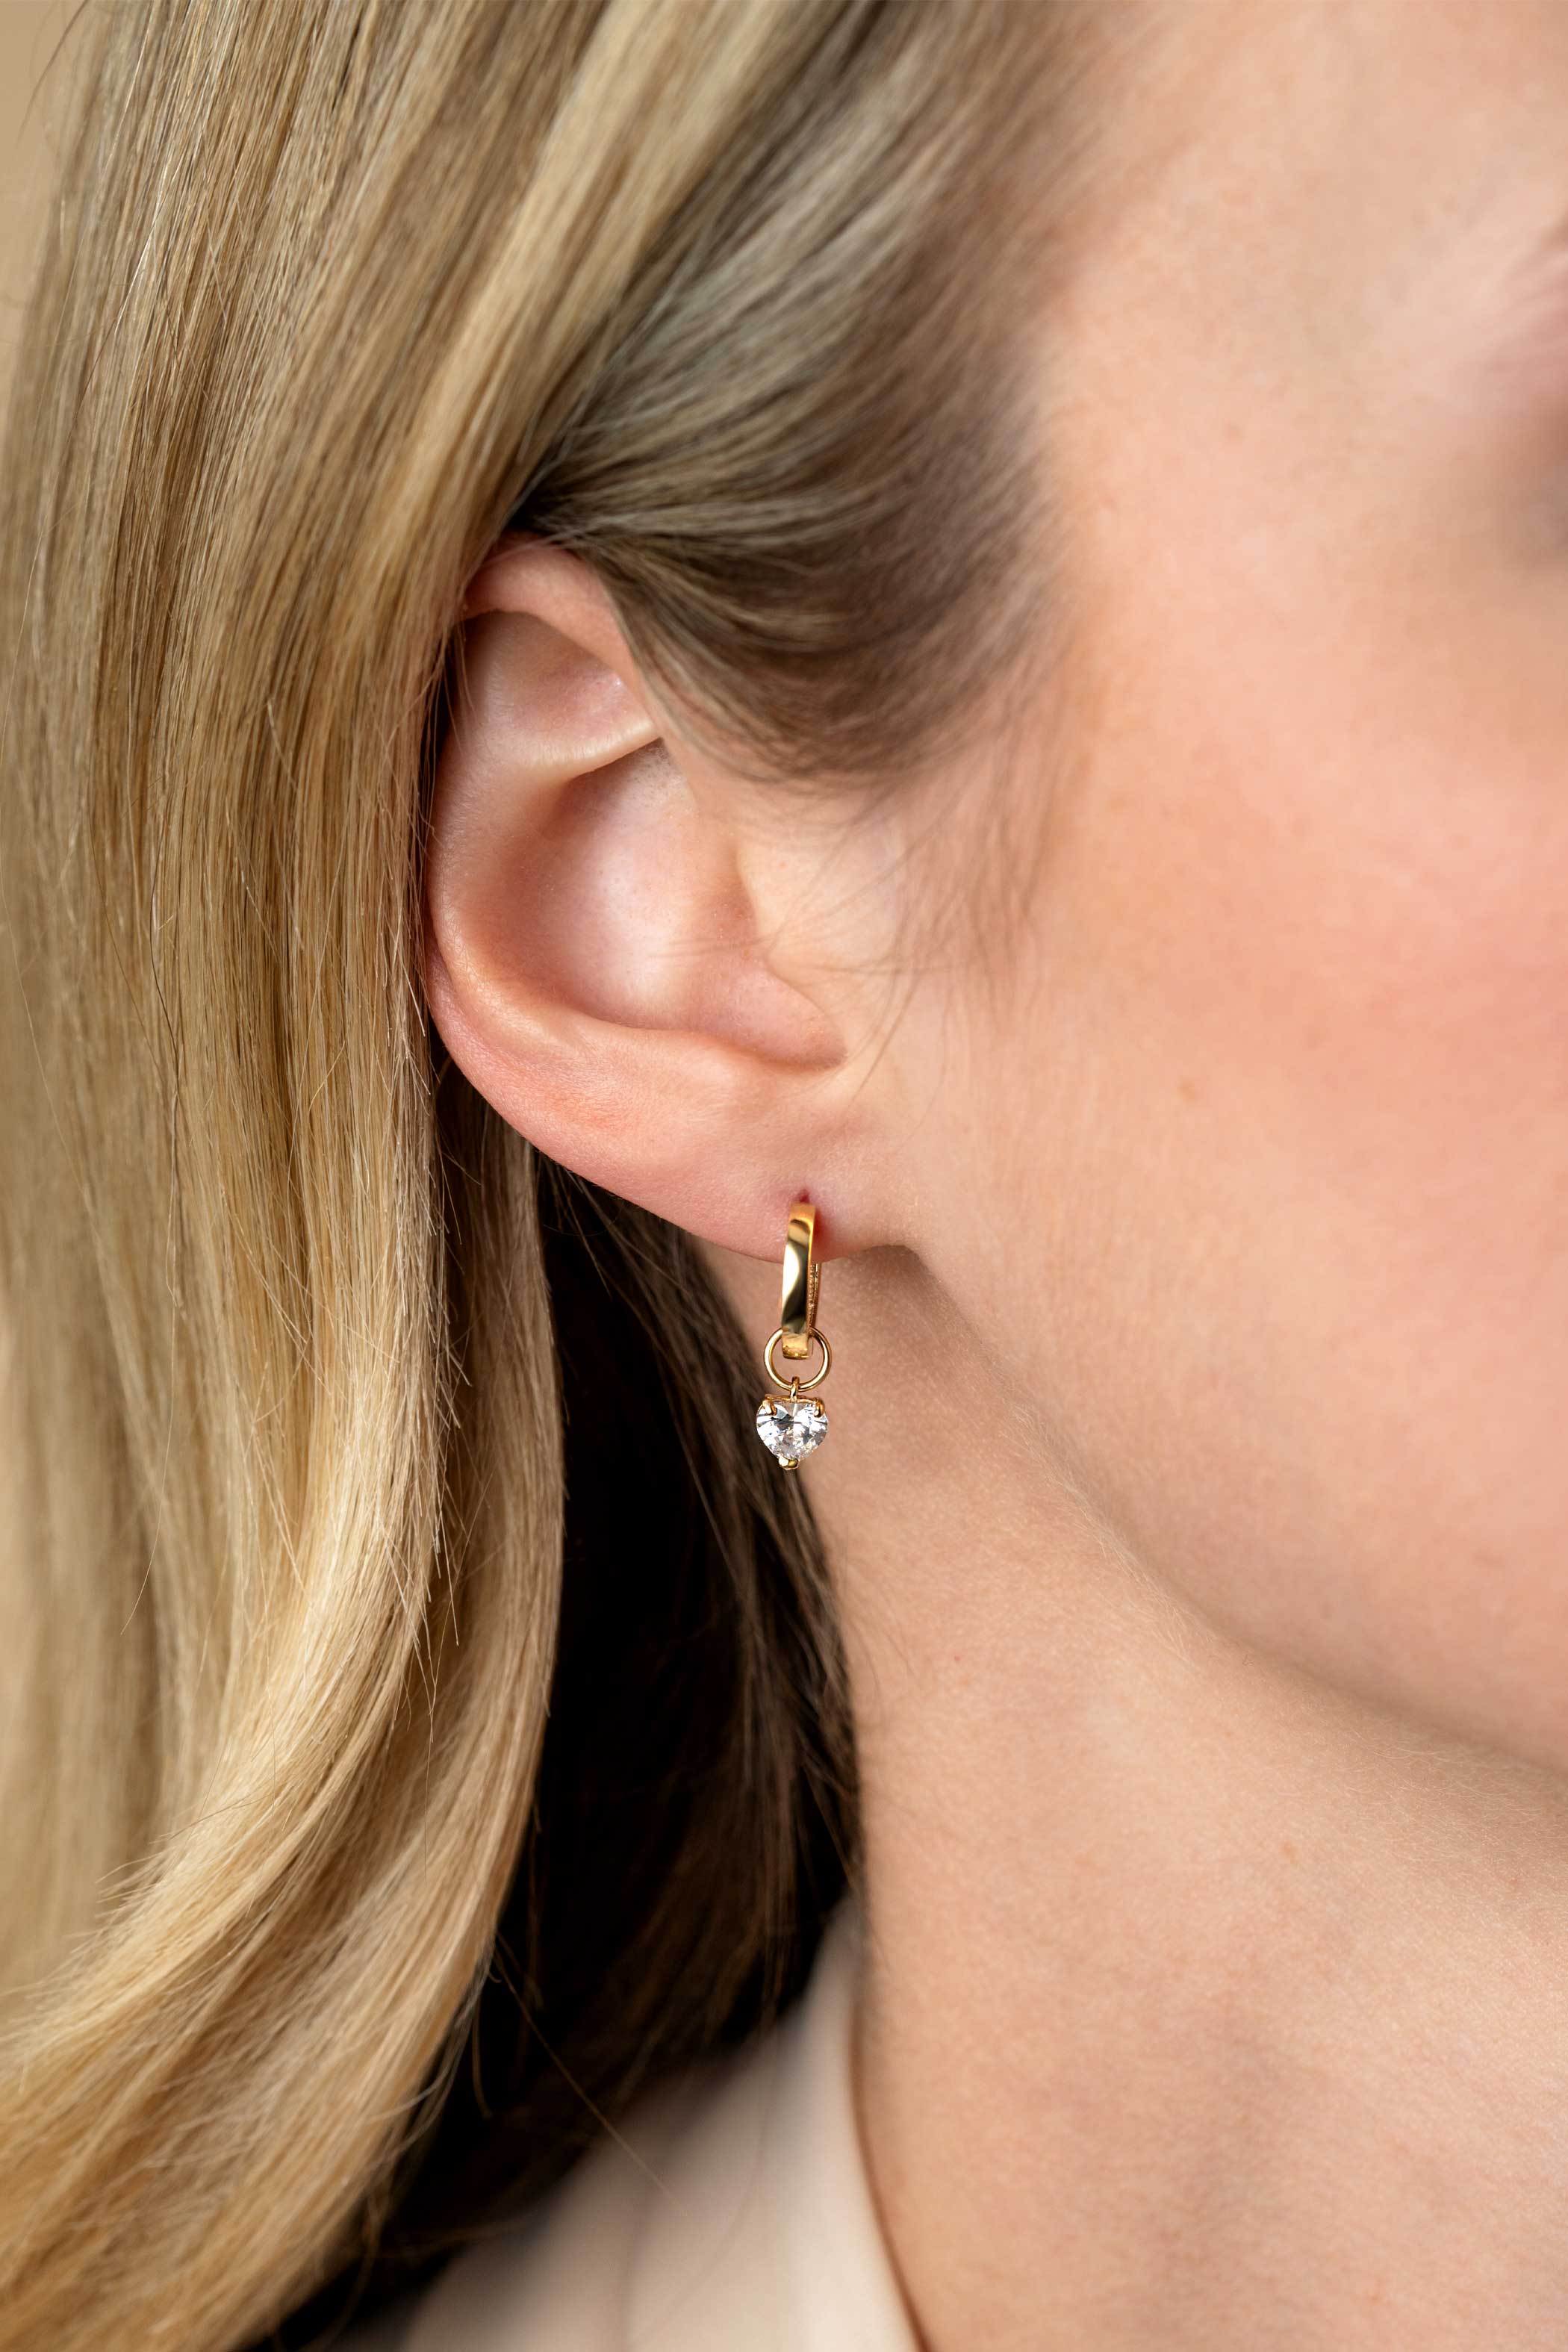 ZINZI 14K Gold Earrings Pendants Heart White Zirconia 5mm ZGCH422 (excl. hoop earrings)